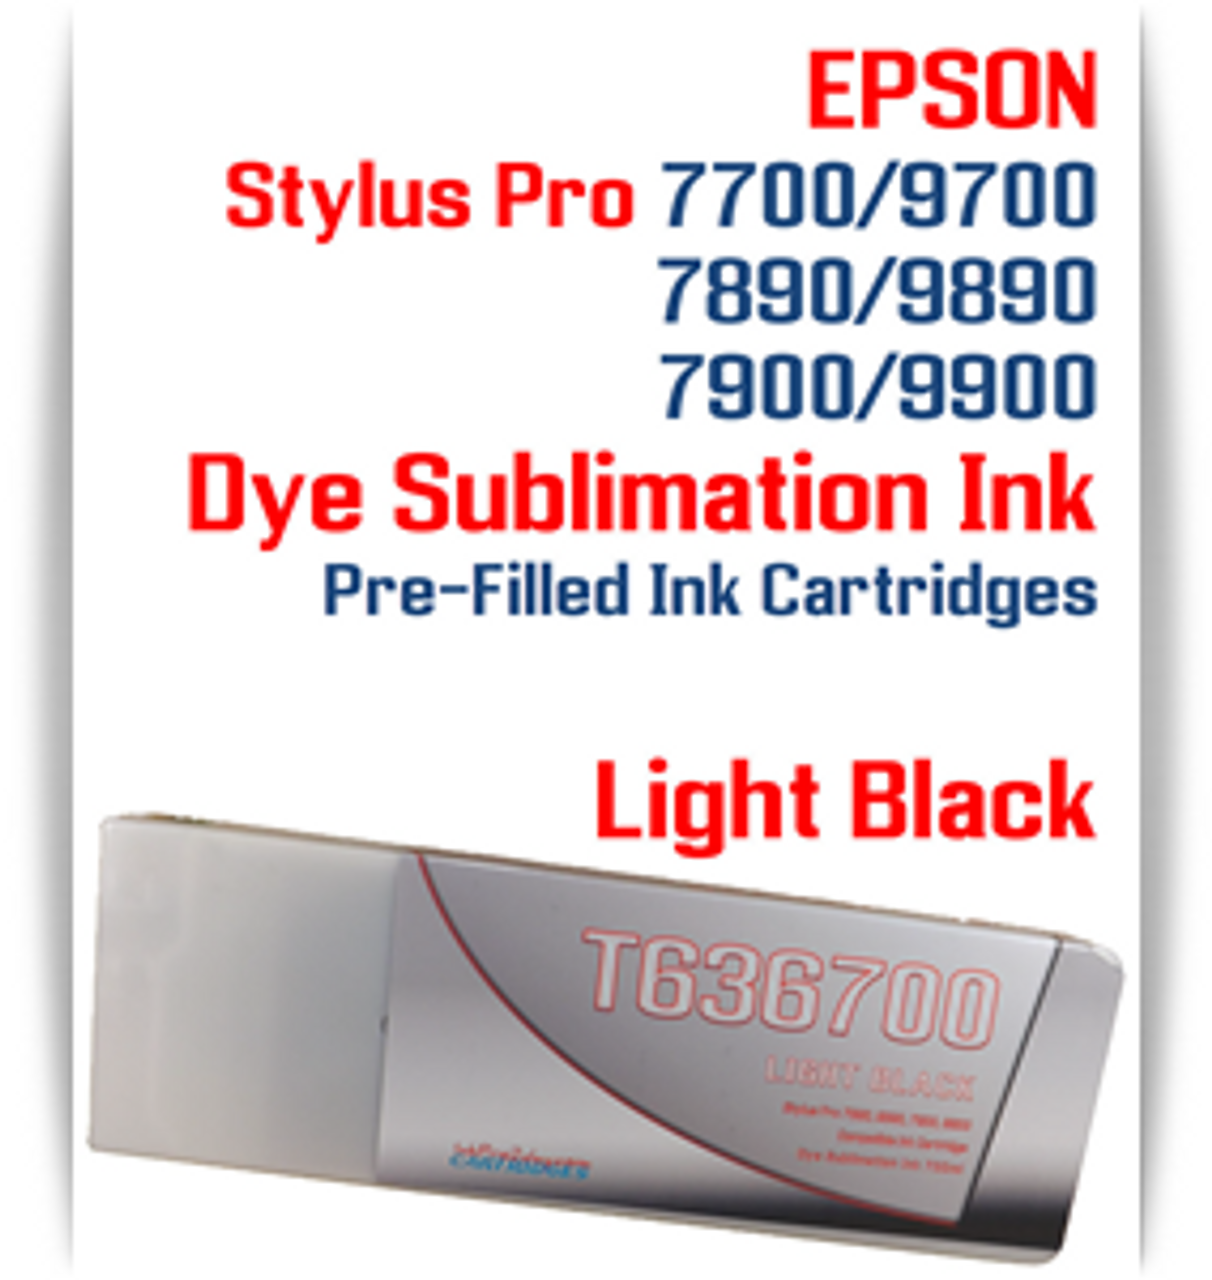 Light Black Epson Stylus Pro 7890/9890 Pre-Filled Dye Sublimation Ink Cartridge